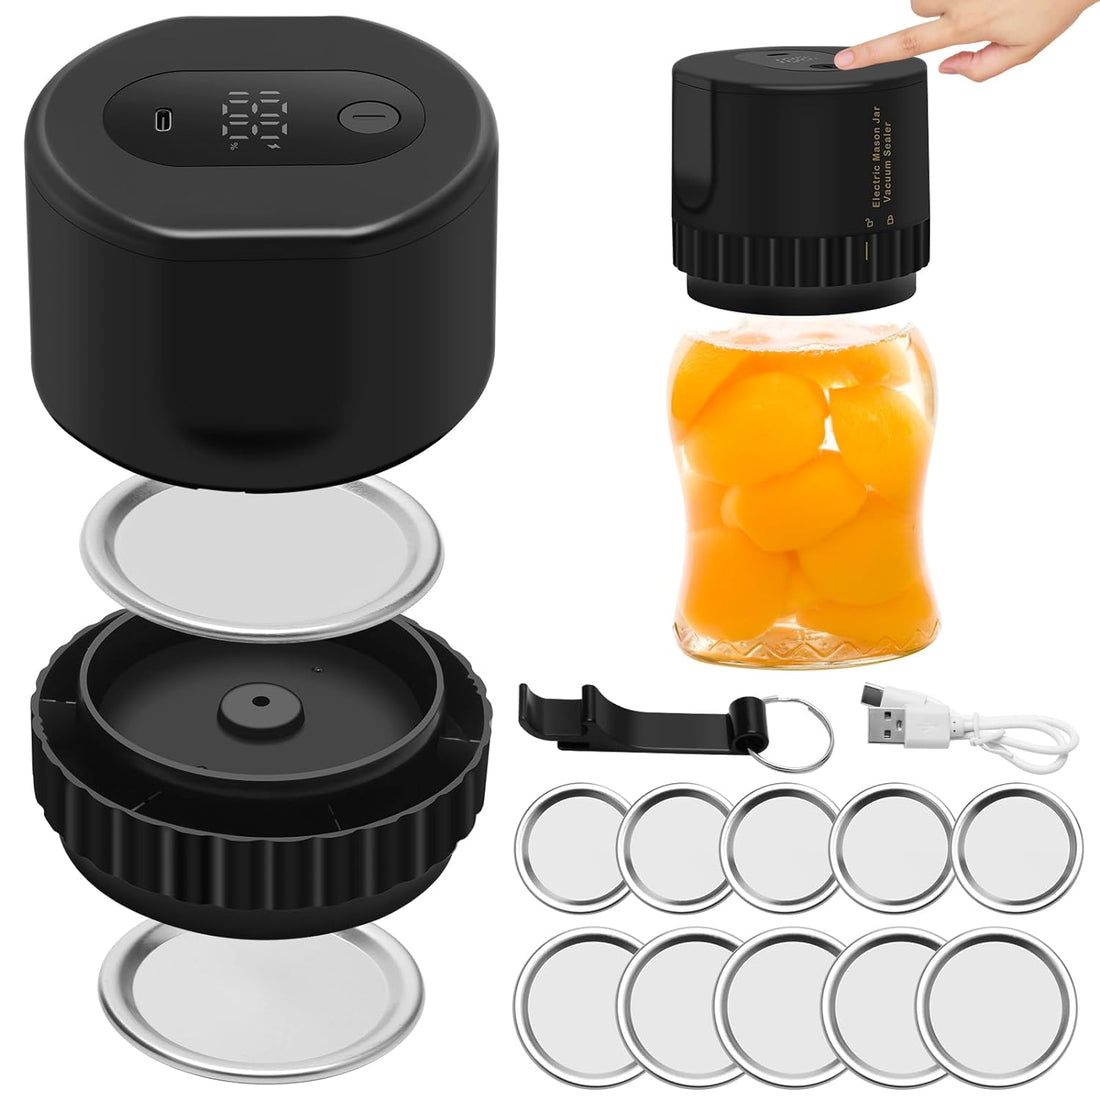 Mason Jar Vacuum Sealer, Coitek Electric Vacuum Sealer For Jars, Black Mason Jar Sealer Vacuum Sealing Kit With 1PCS Lid Opener, 5PCS Wide Mouth and 5PCS Regular Mouth Jar Lids